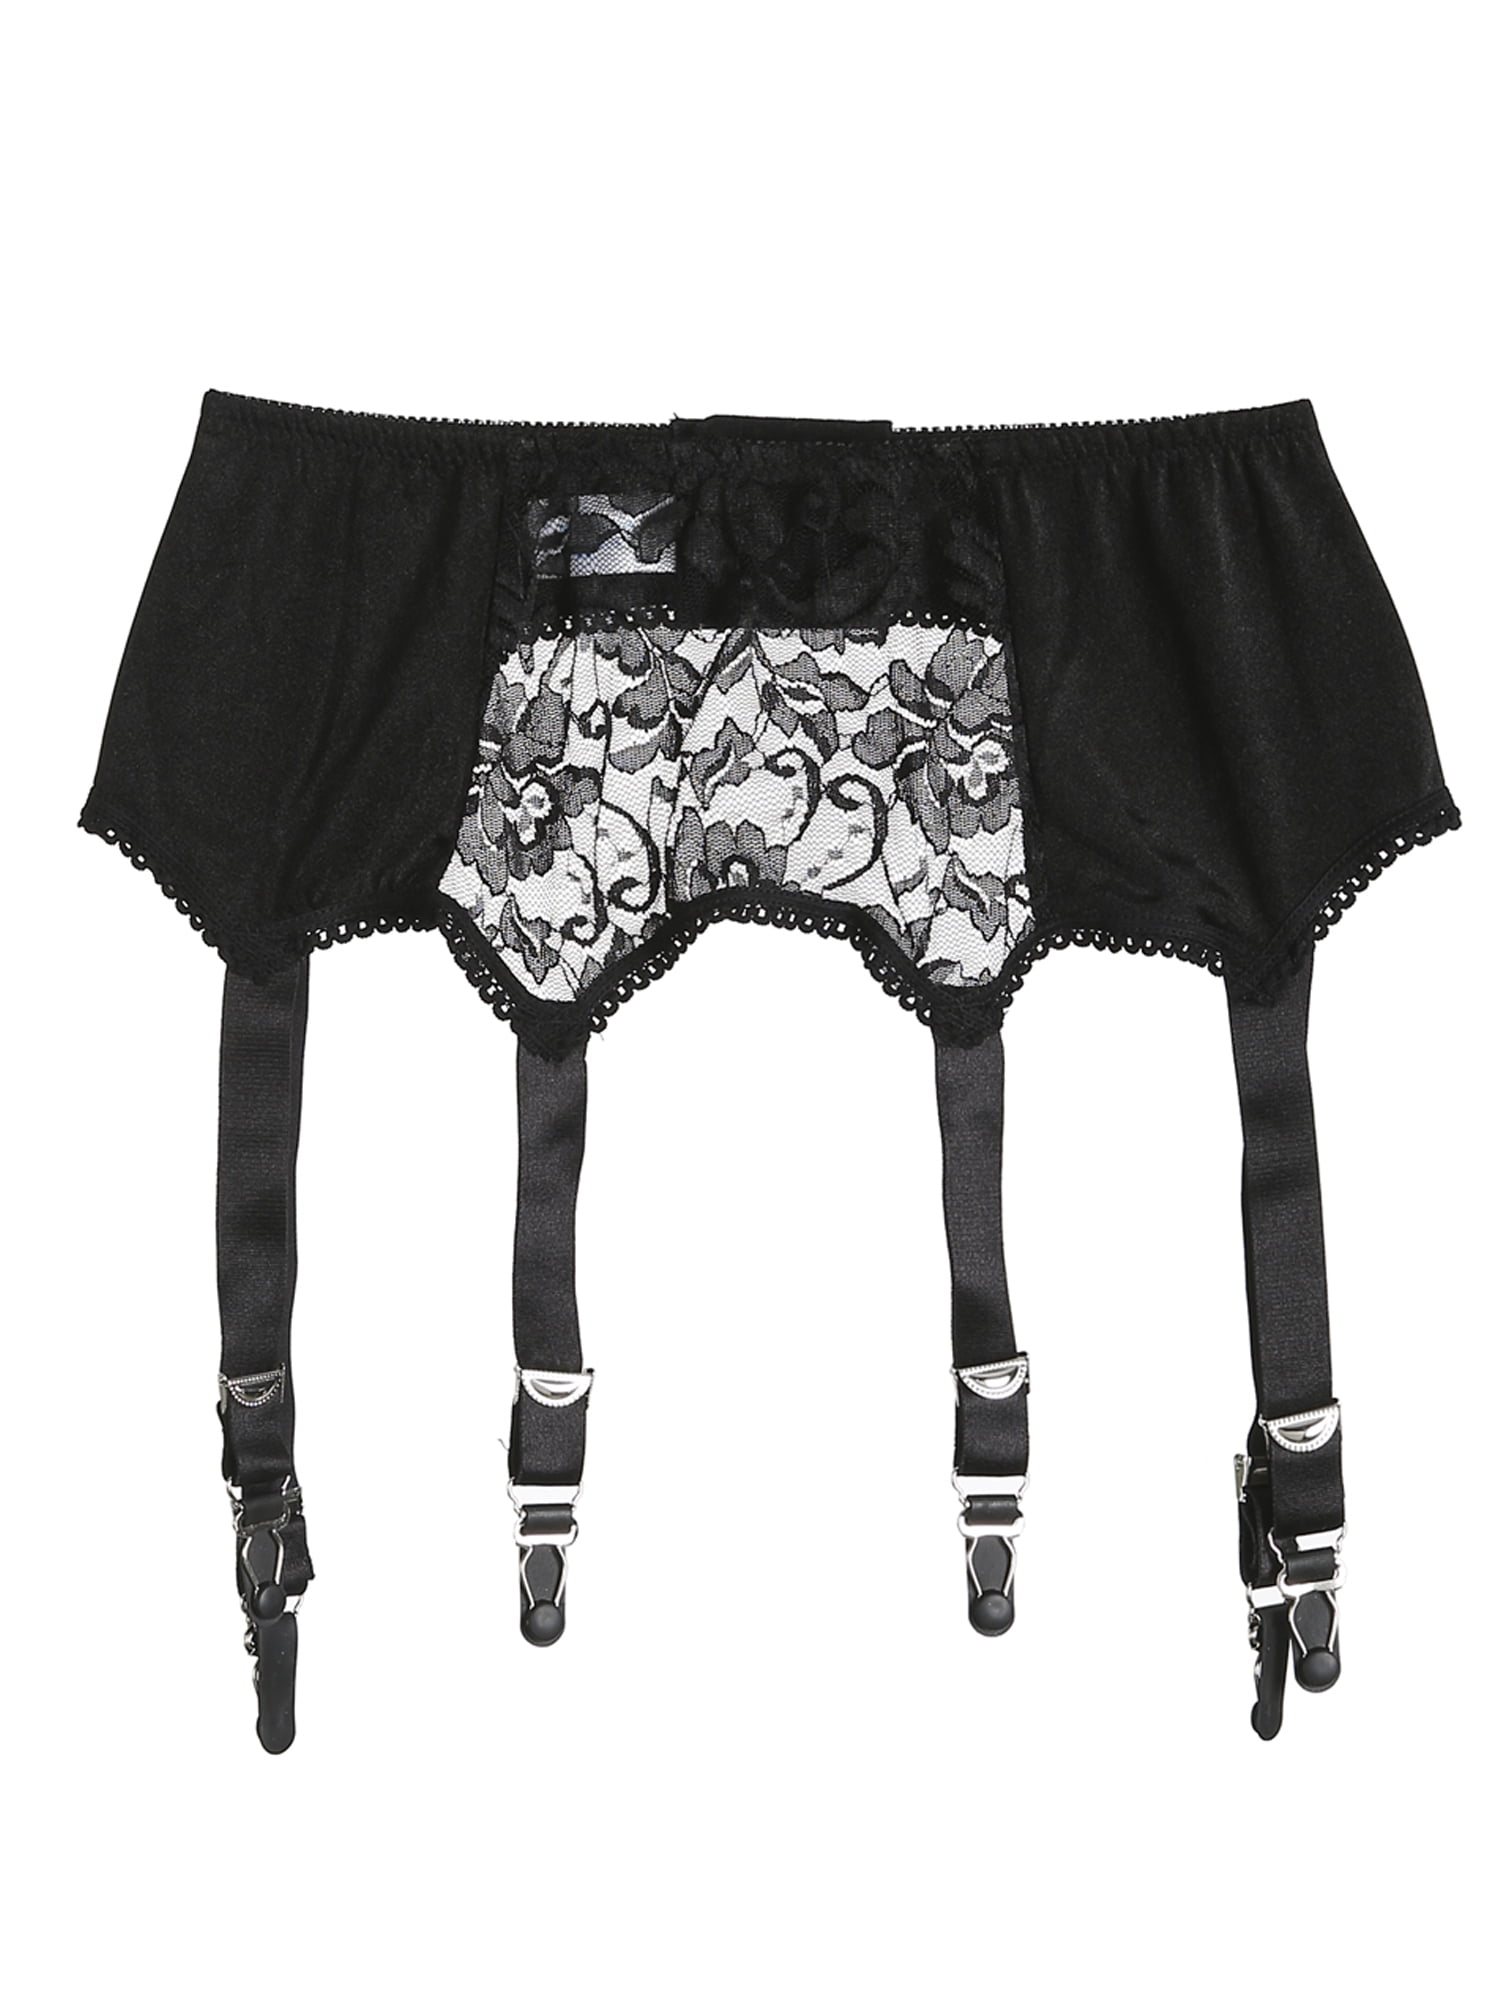 Musuos Summer New Women Fancy Sheer Garter Belt Over The Knee Thigh High Stockings Lace